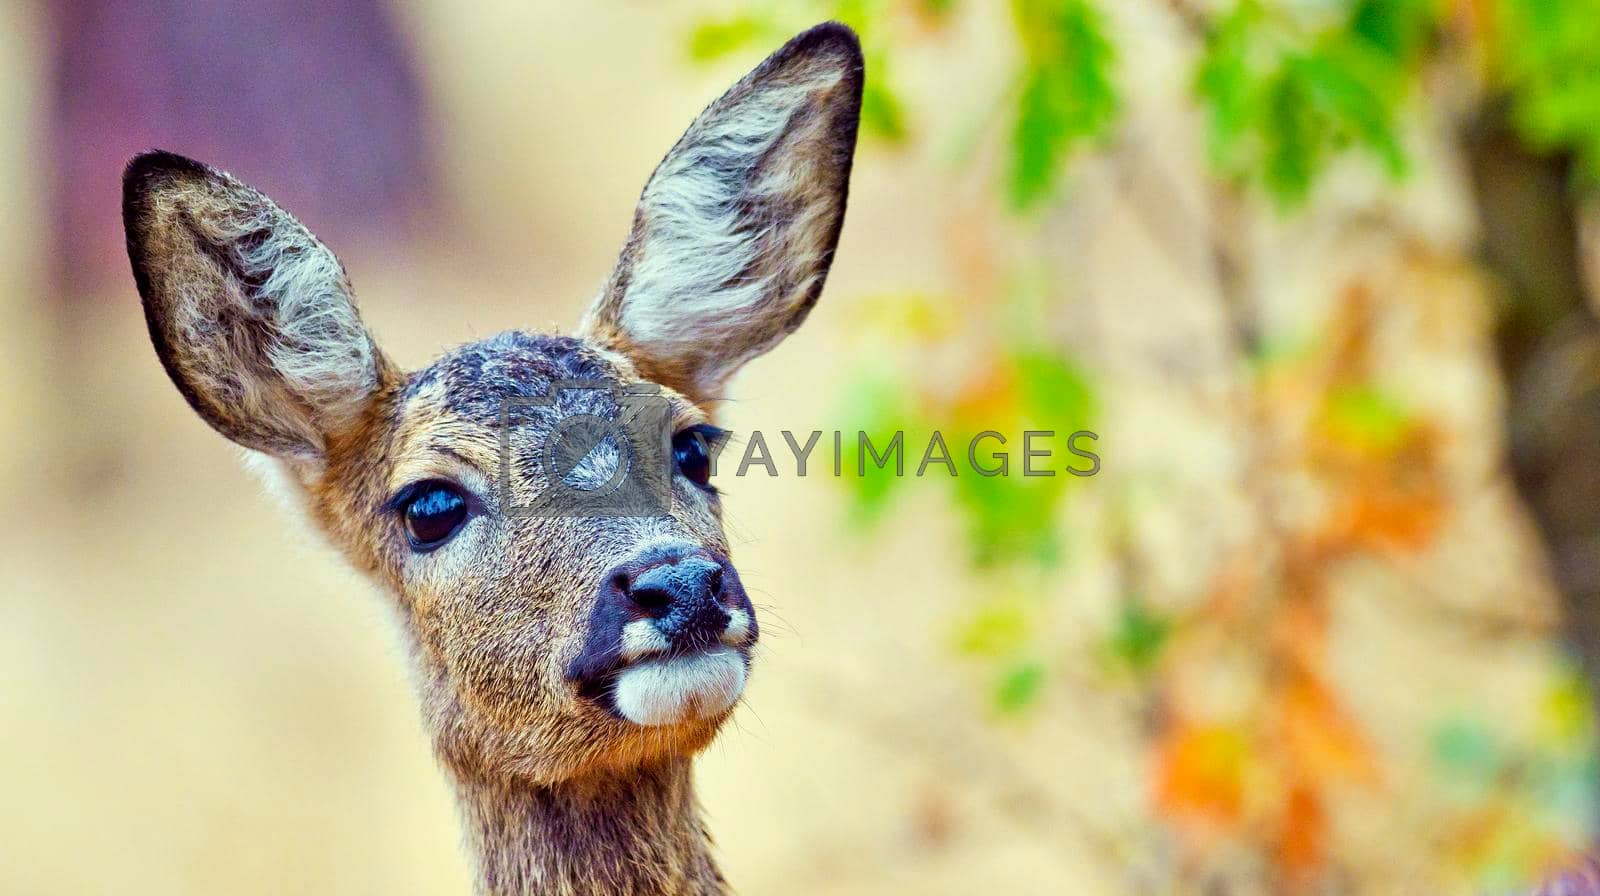 Royalty free image of European Roe Deer, Mediterranean Forest, Spain  by alcaproac